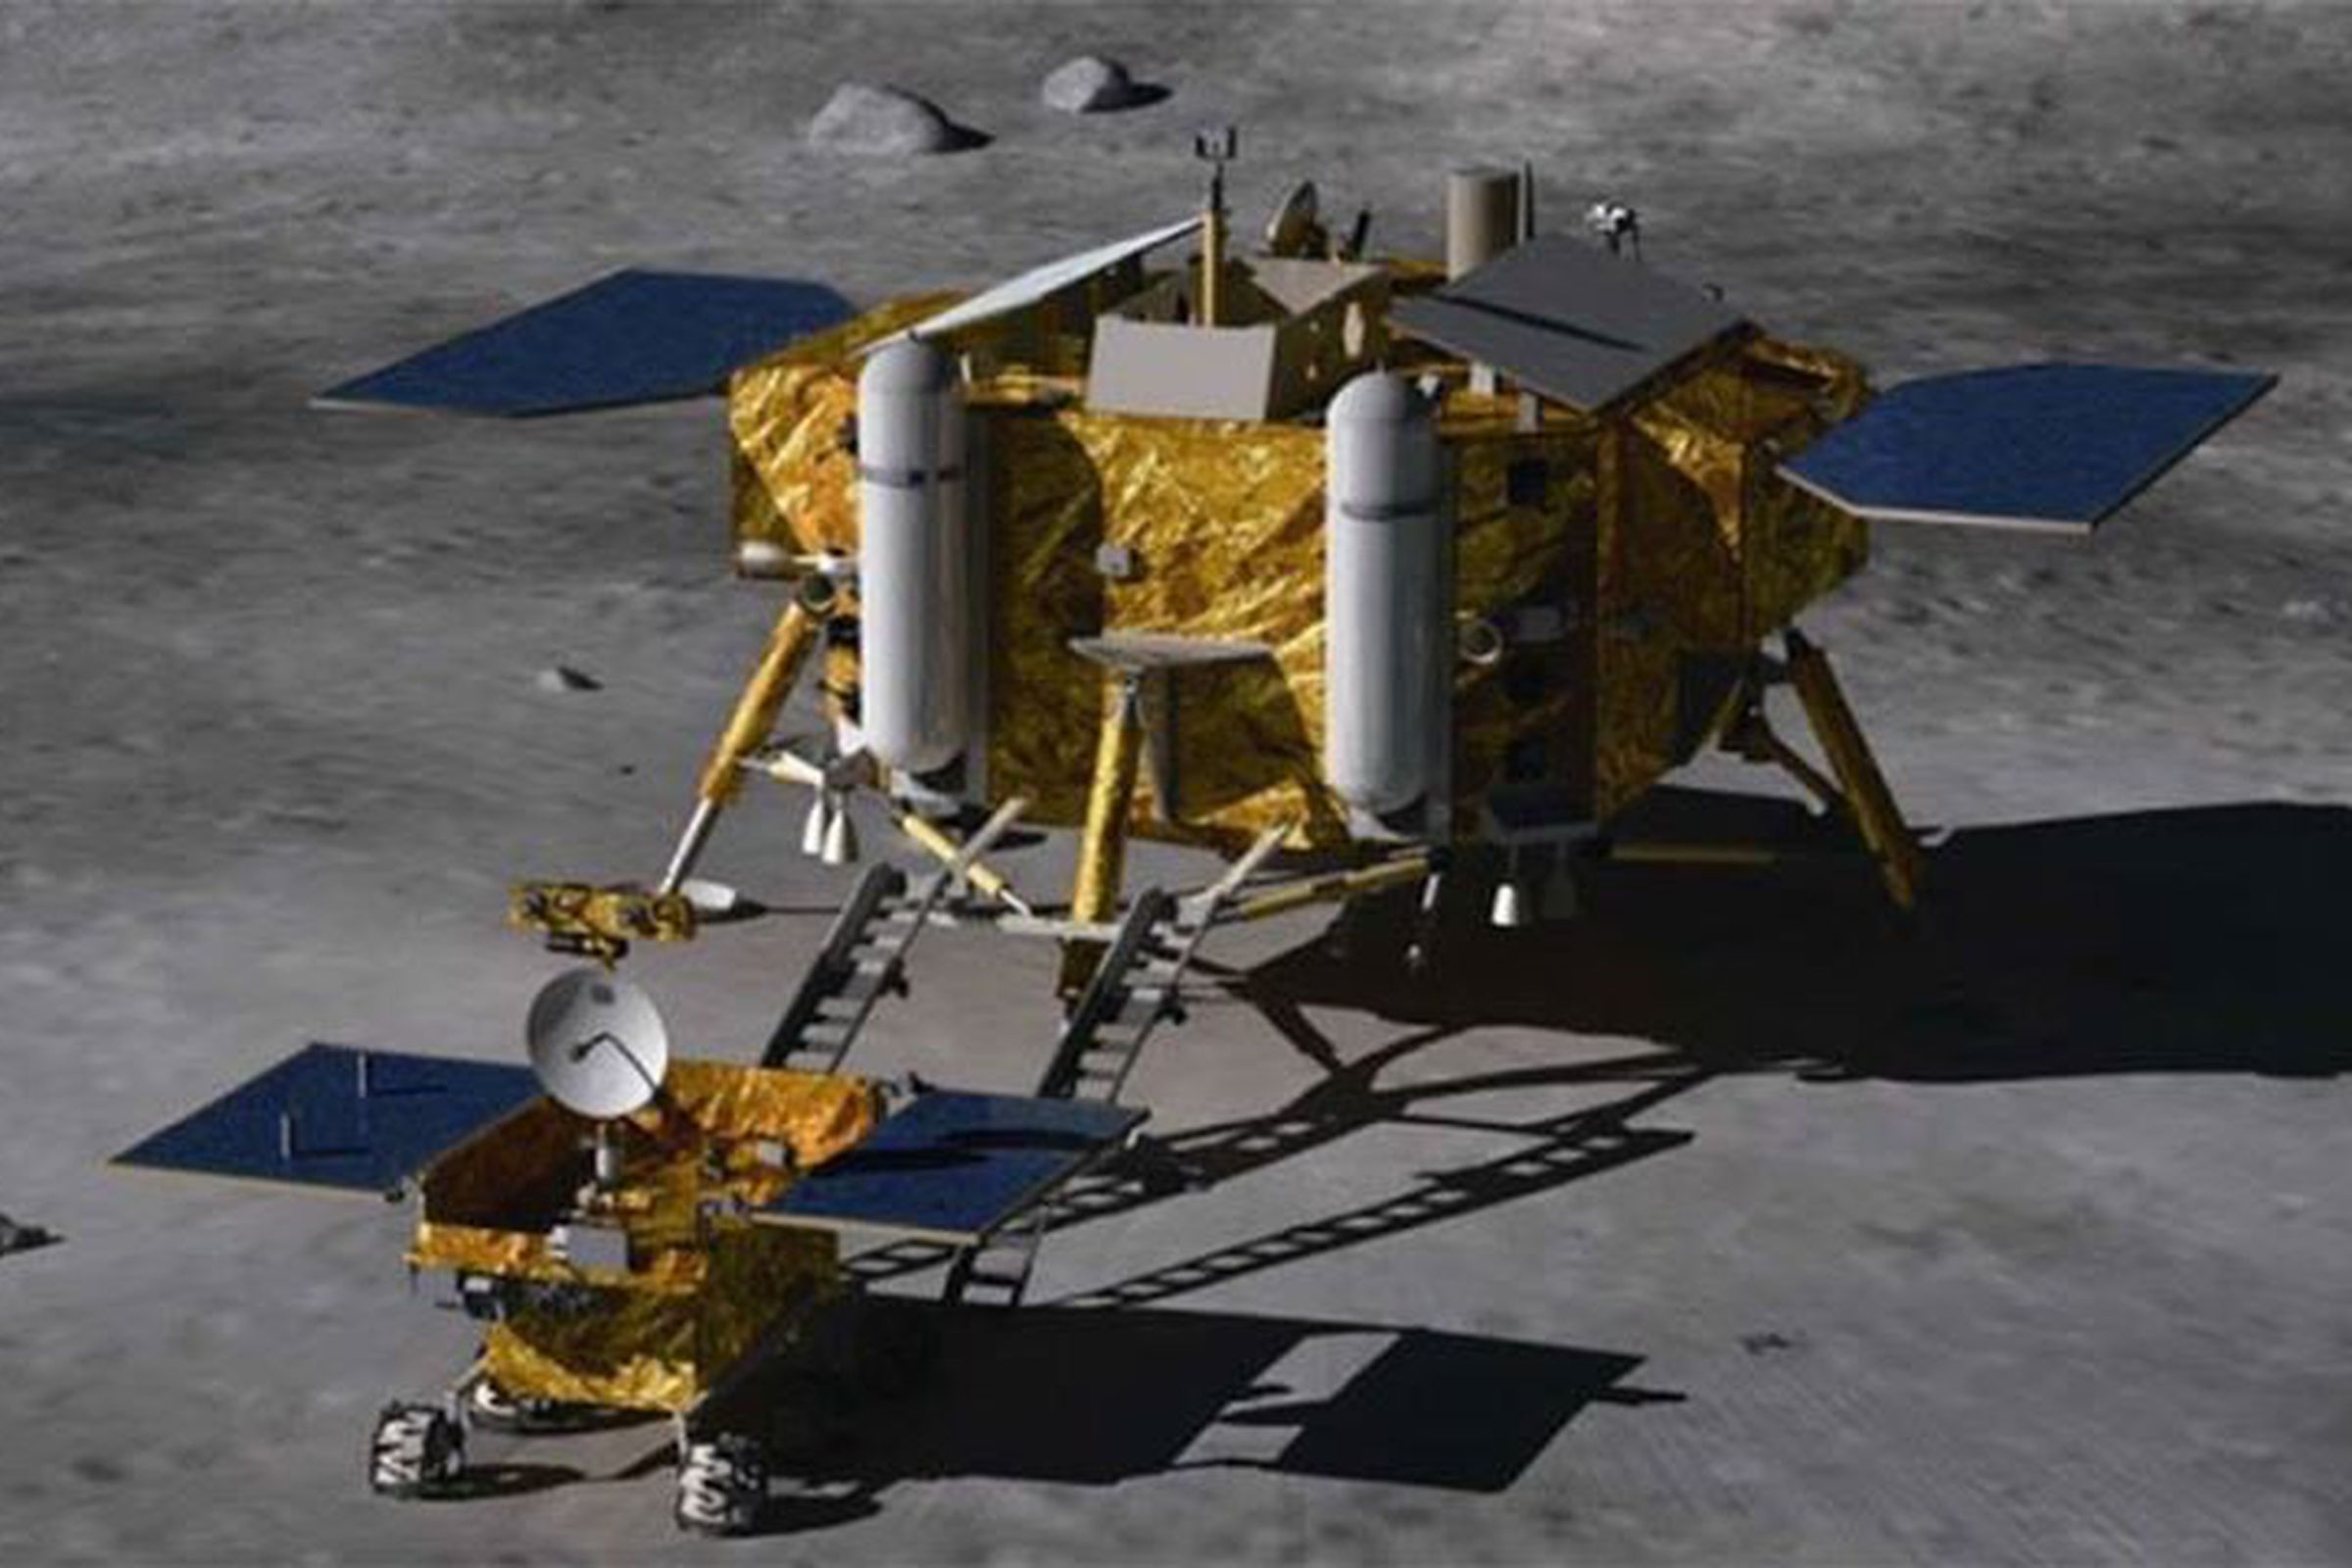 China yutu chang'e lunar lander rover